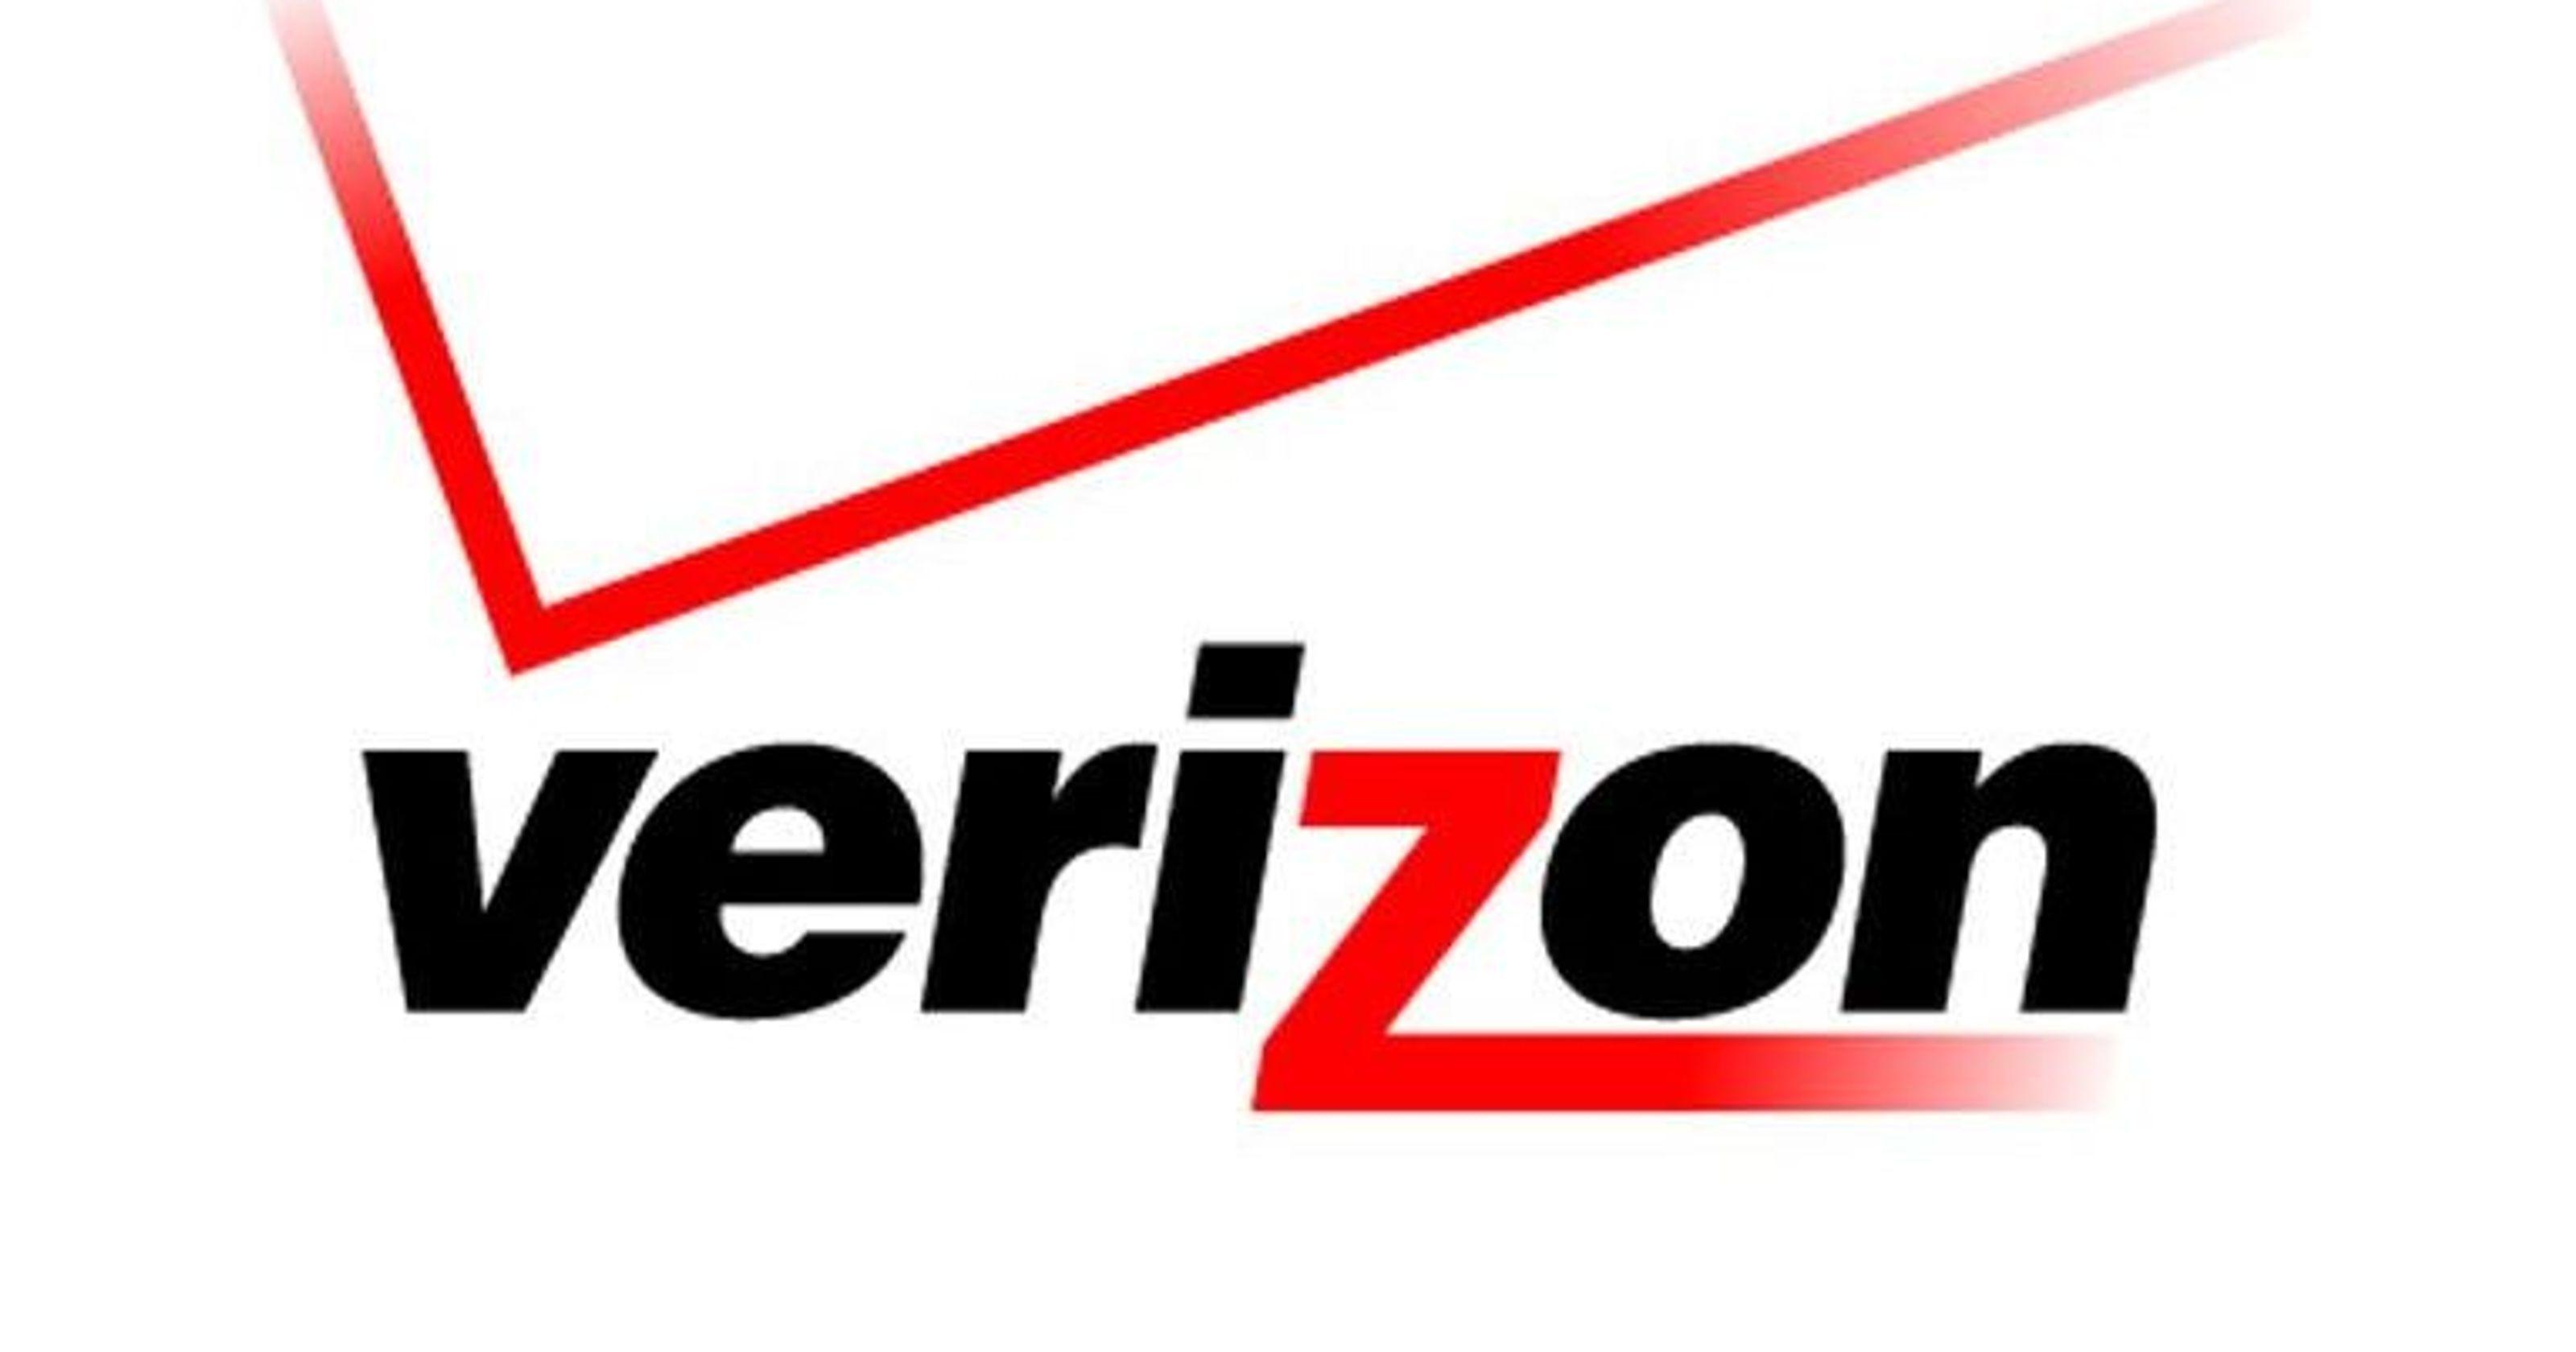 Check Verizon Logo - Here are the catches in Verizon's unlimited data plan